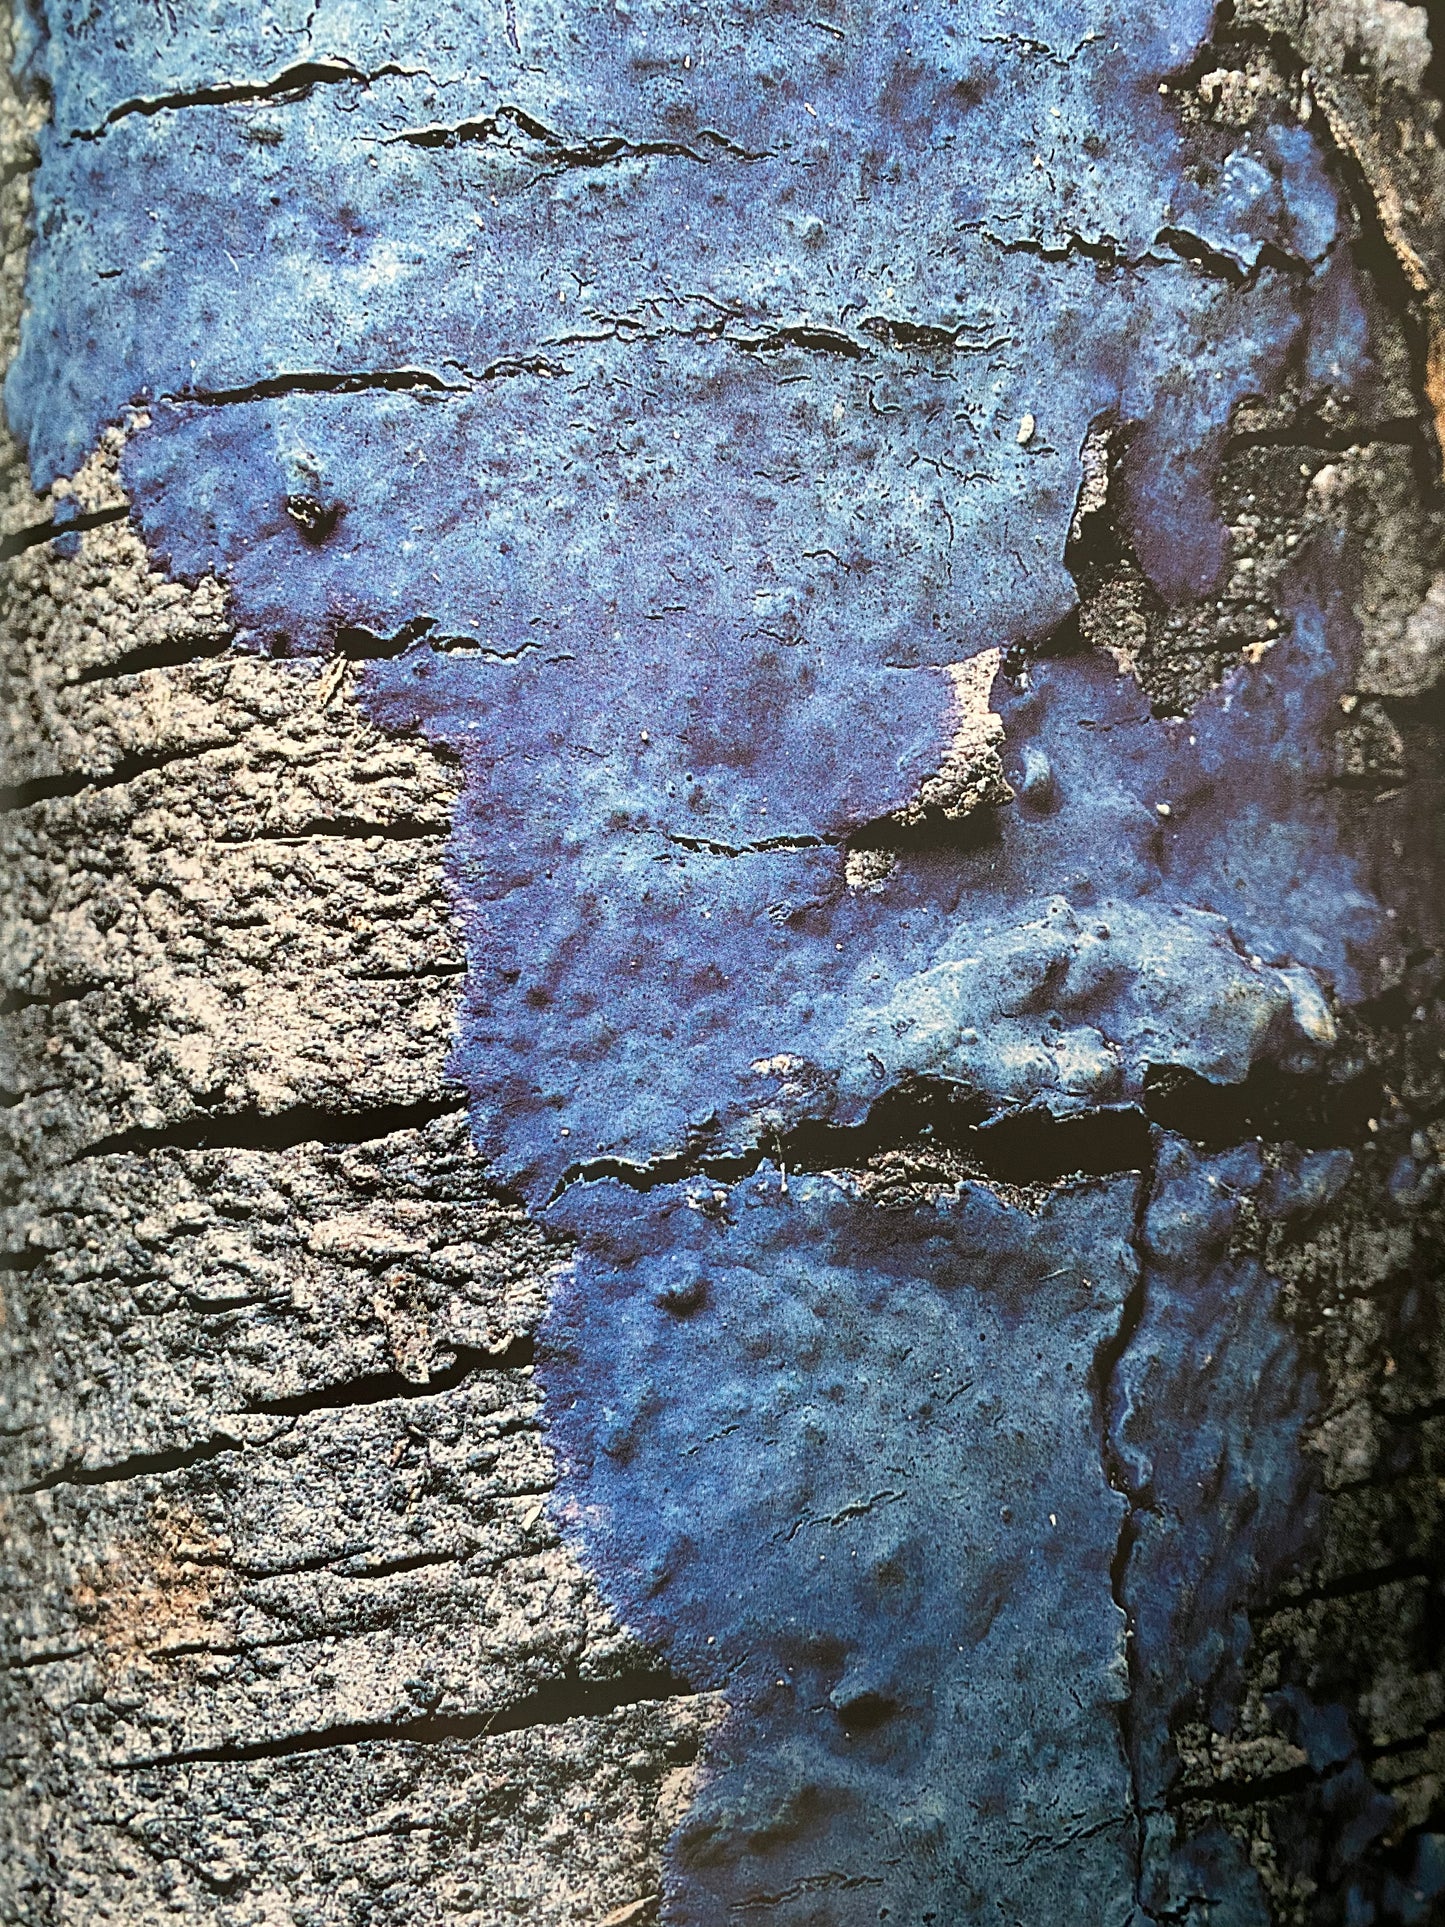 Paul Starosta - Fungi (1999)